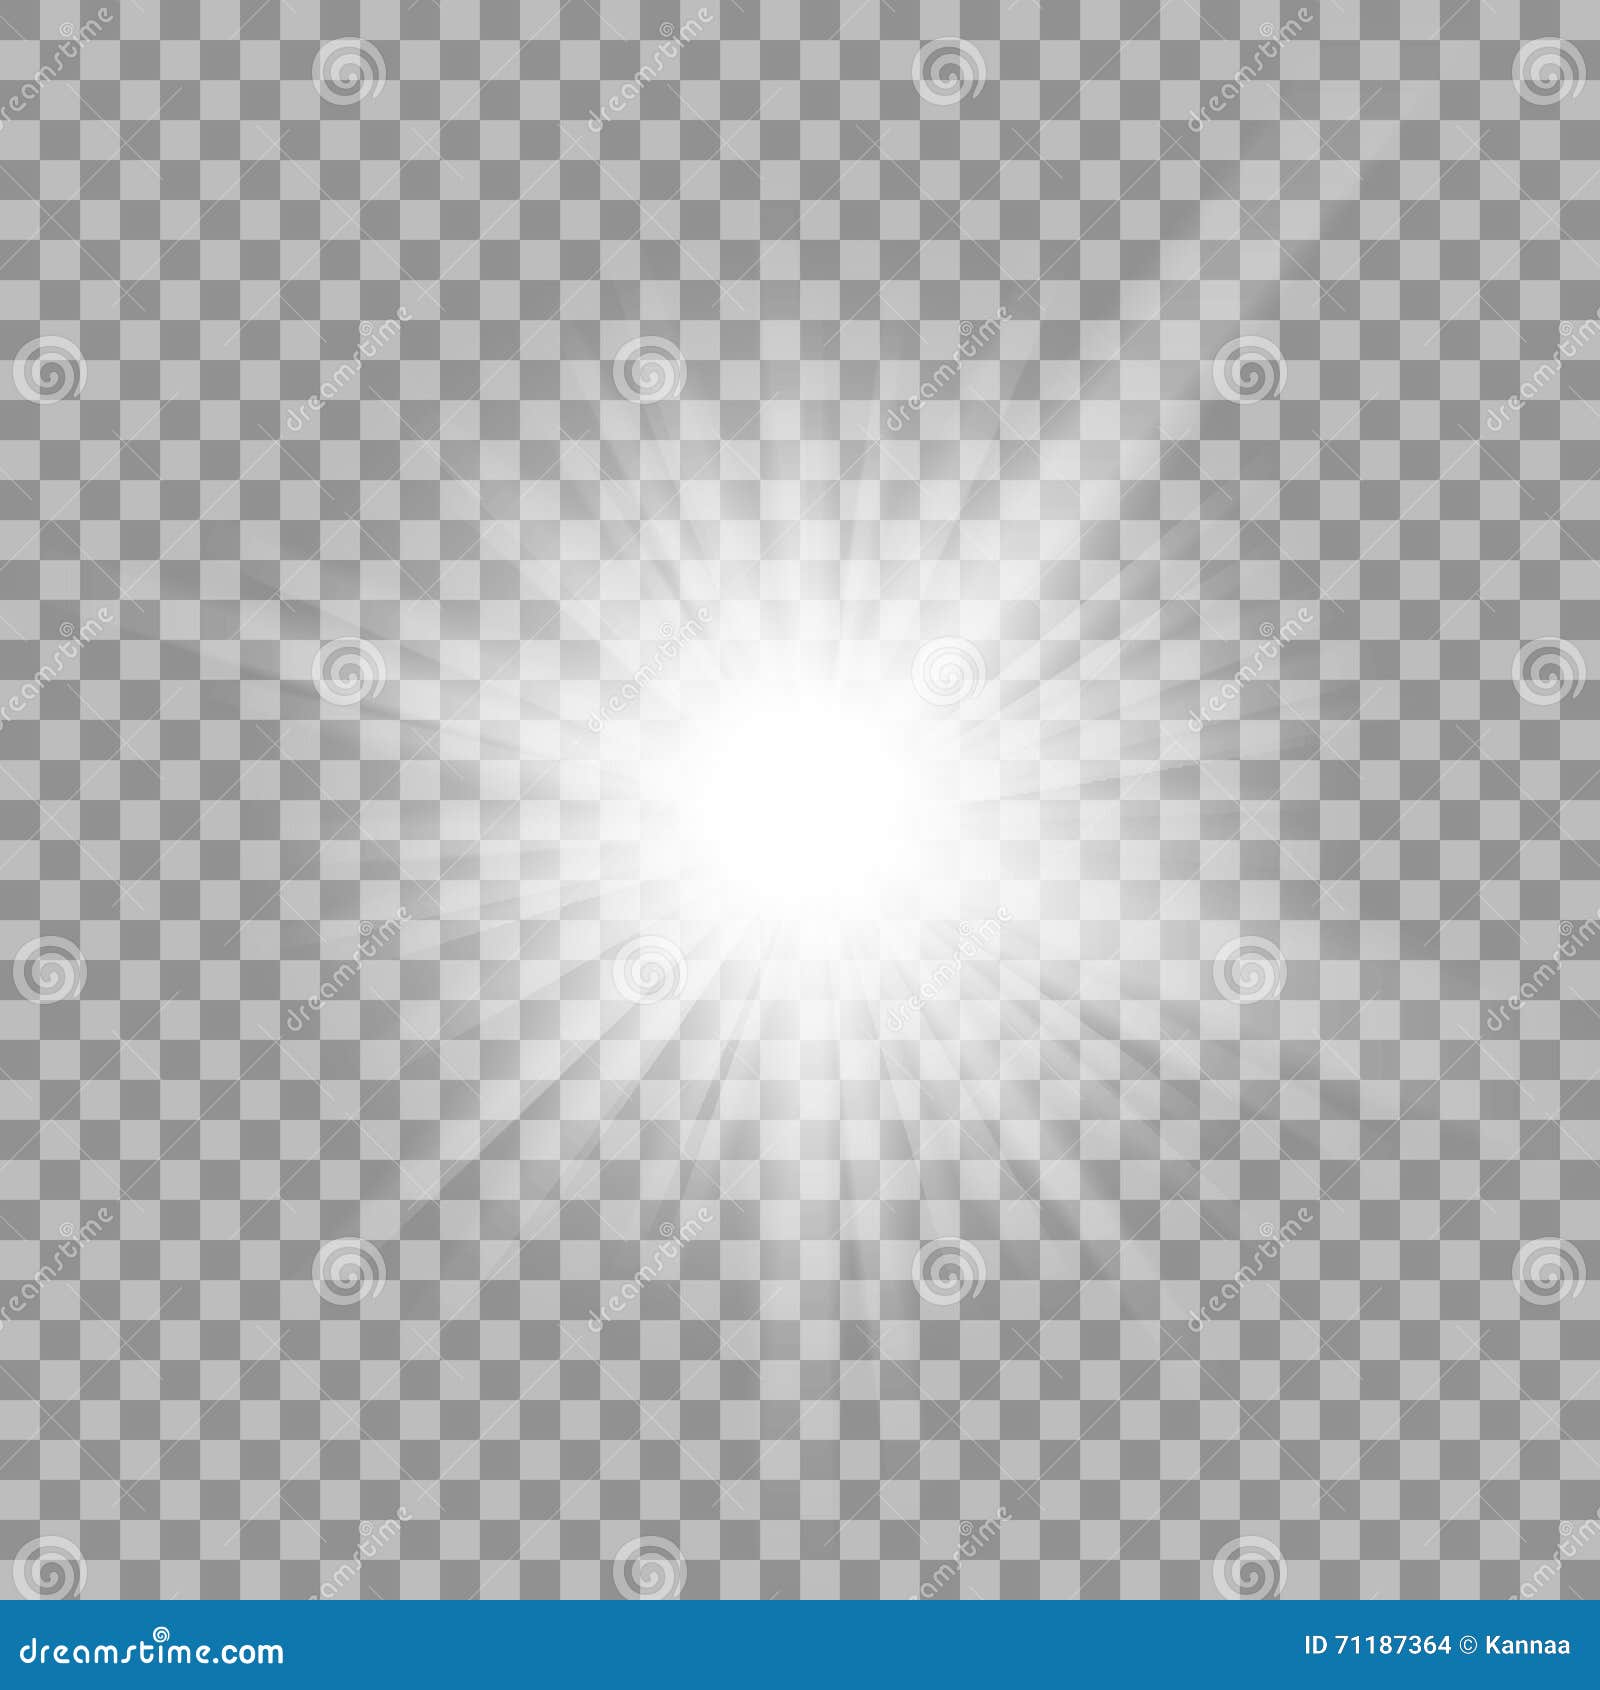 White Glowing Light Burst On Transparent Background. Stock Illustration